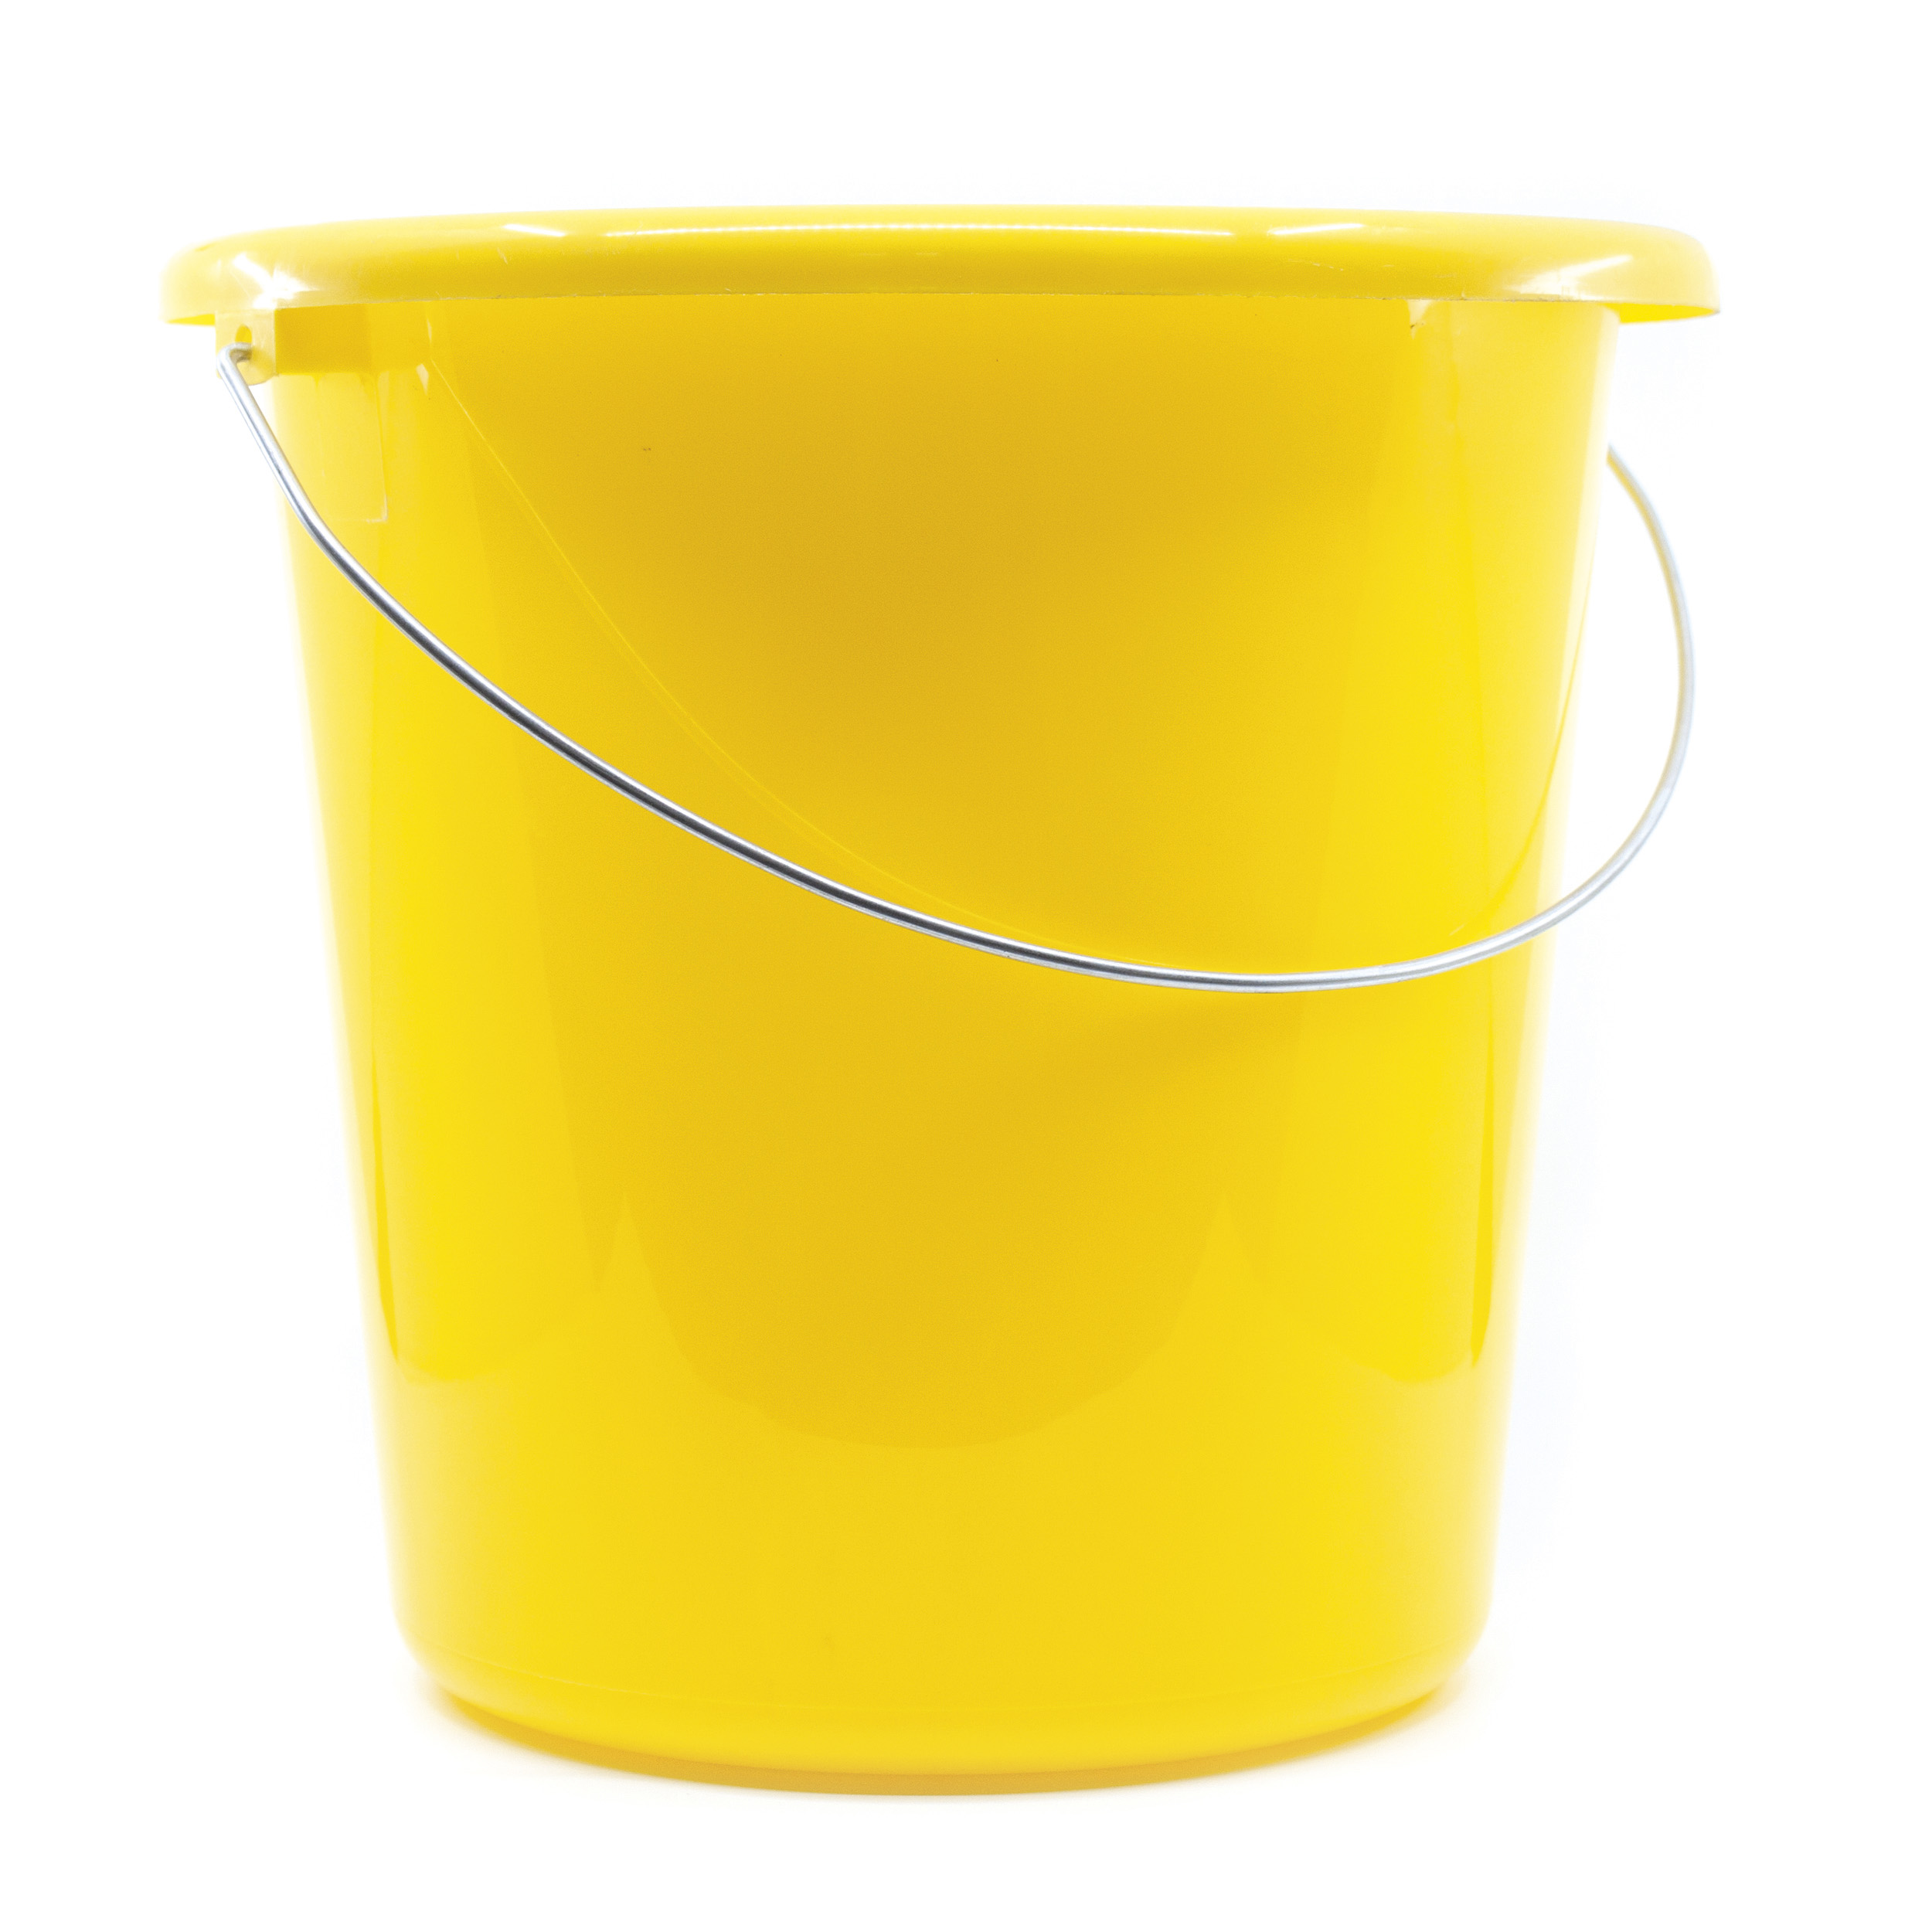 Haushaltseimer 10L mit Metallbügel Farbe: gelb